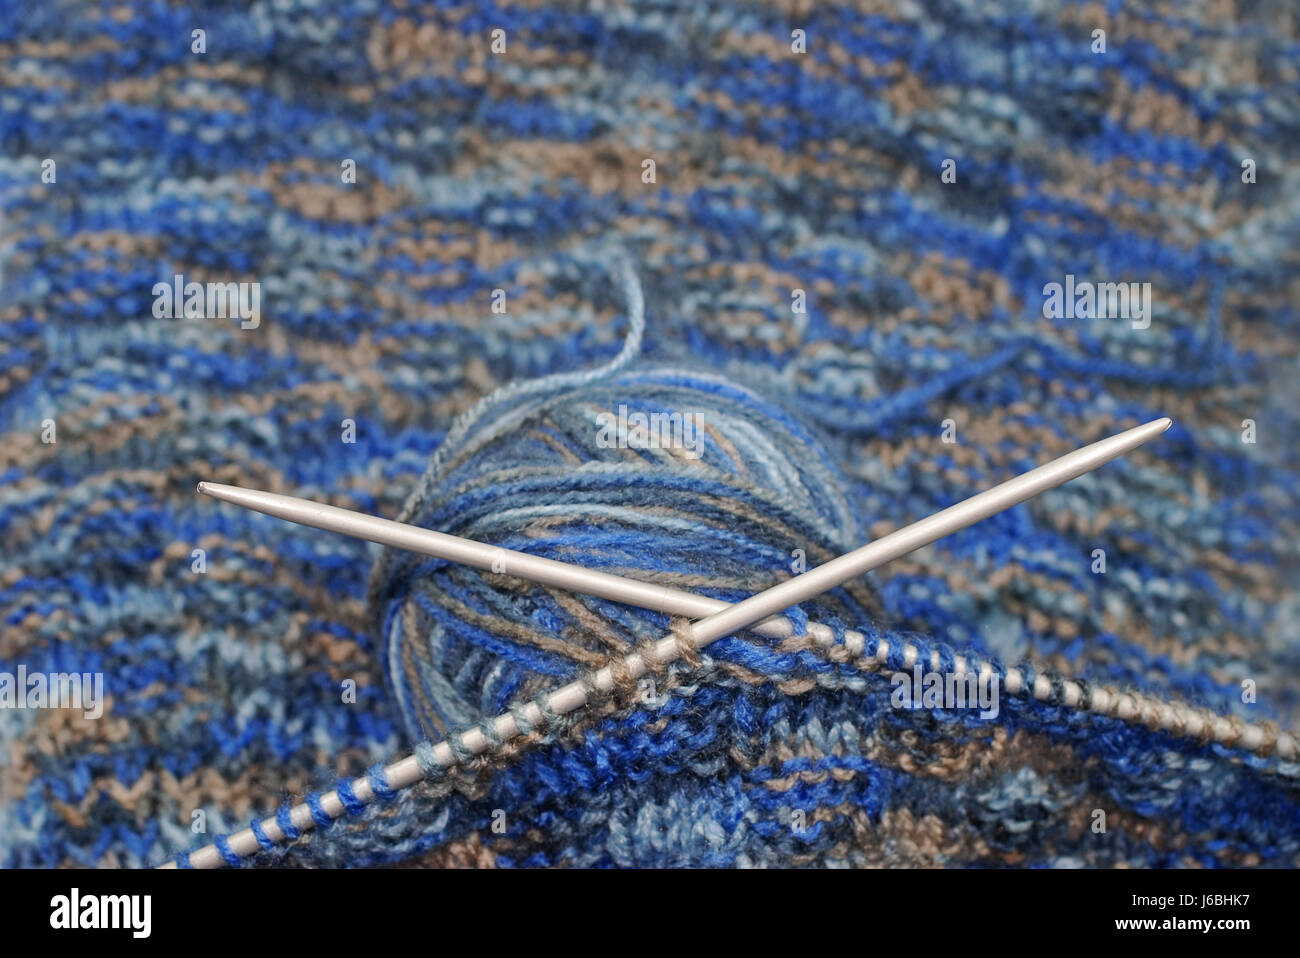 wool knit handicraft knitting design shaping formation shape model figure Stock Photo